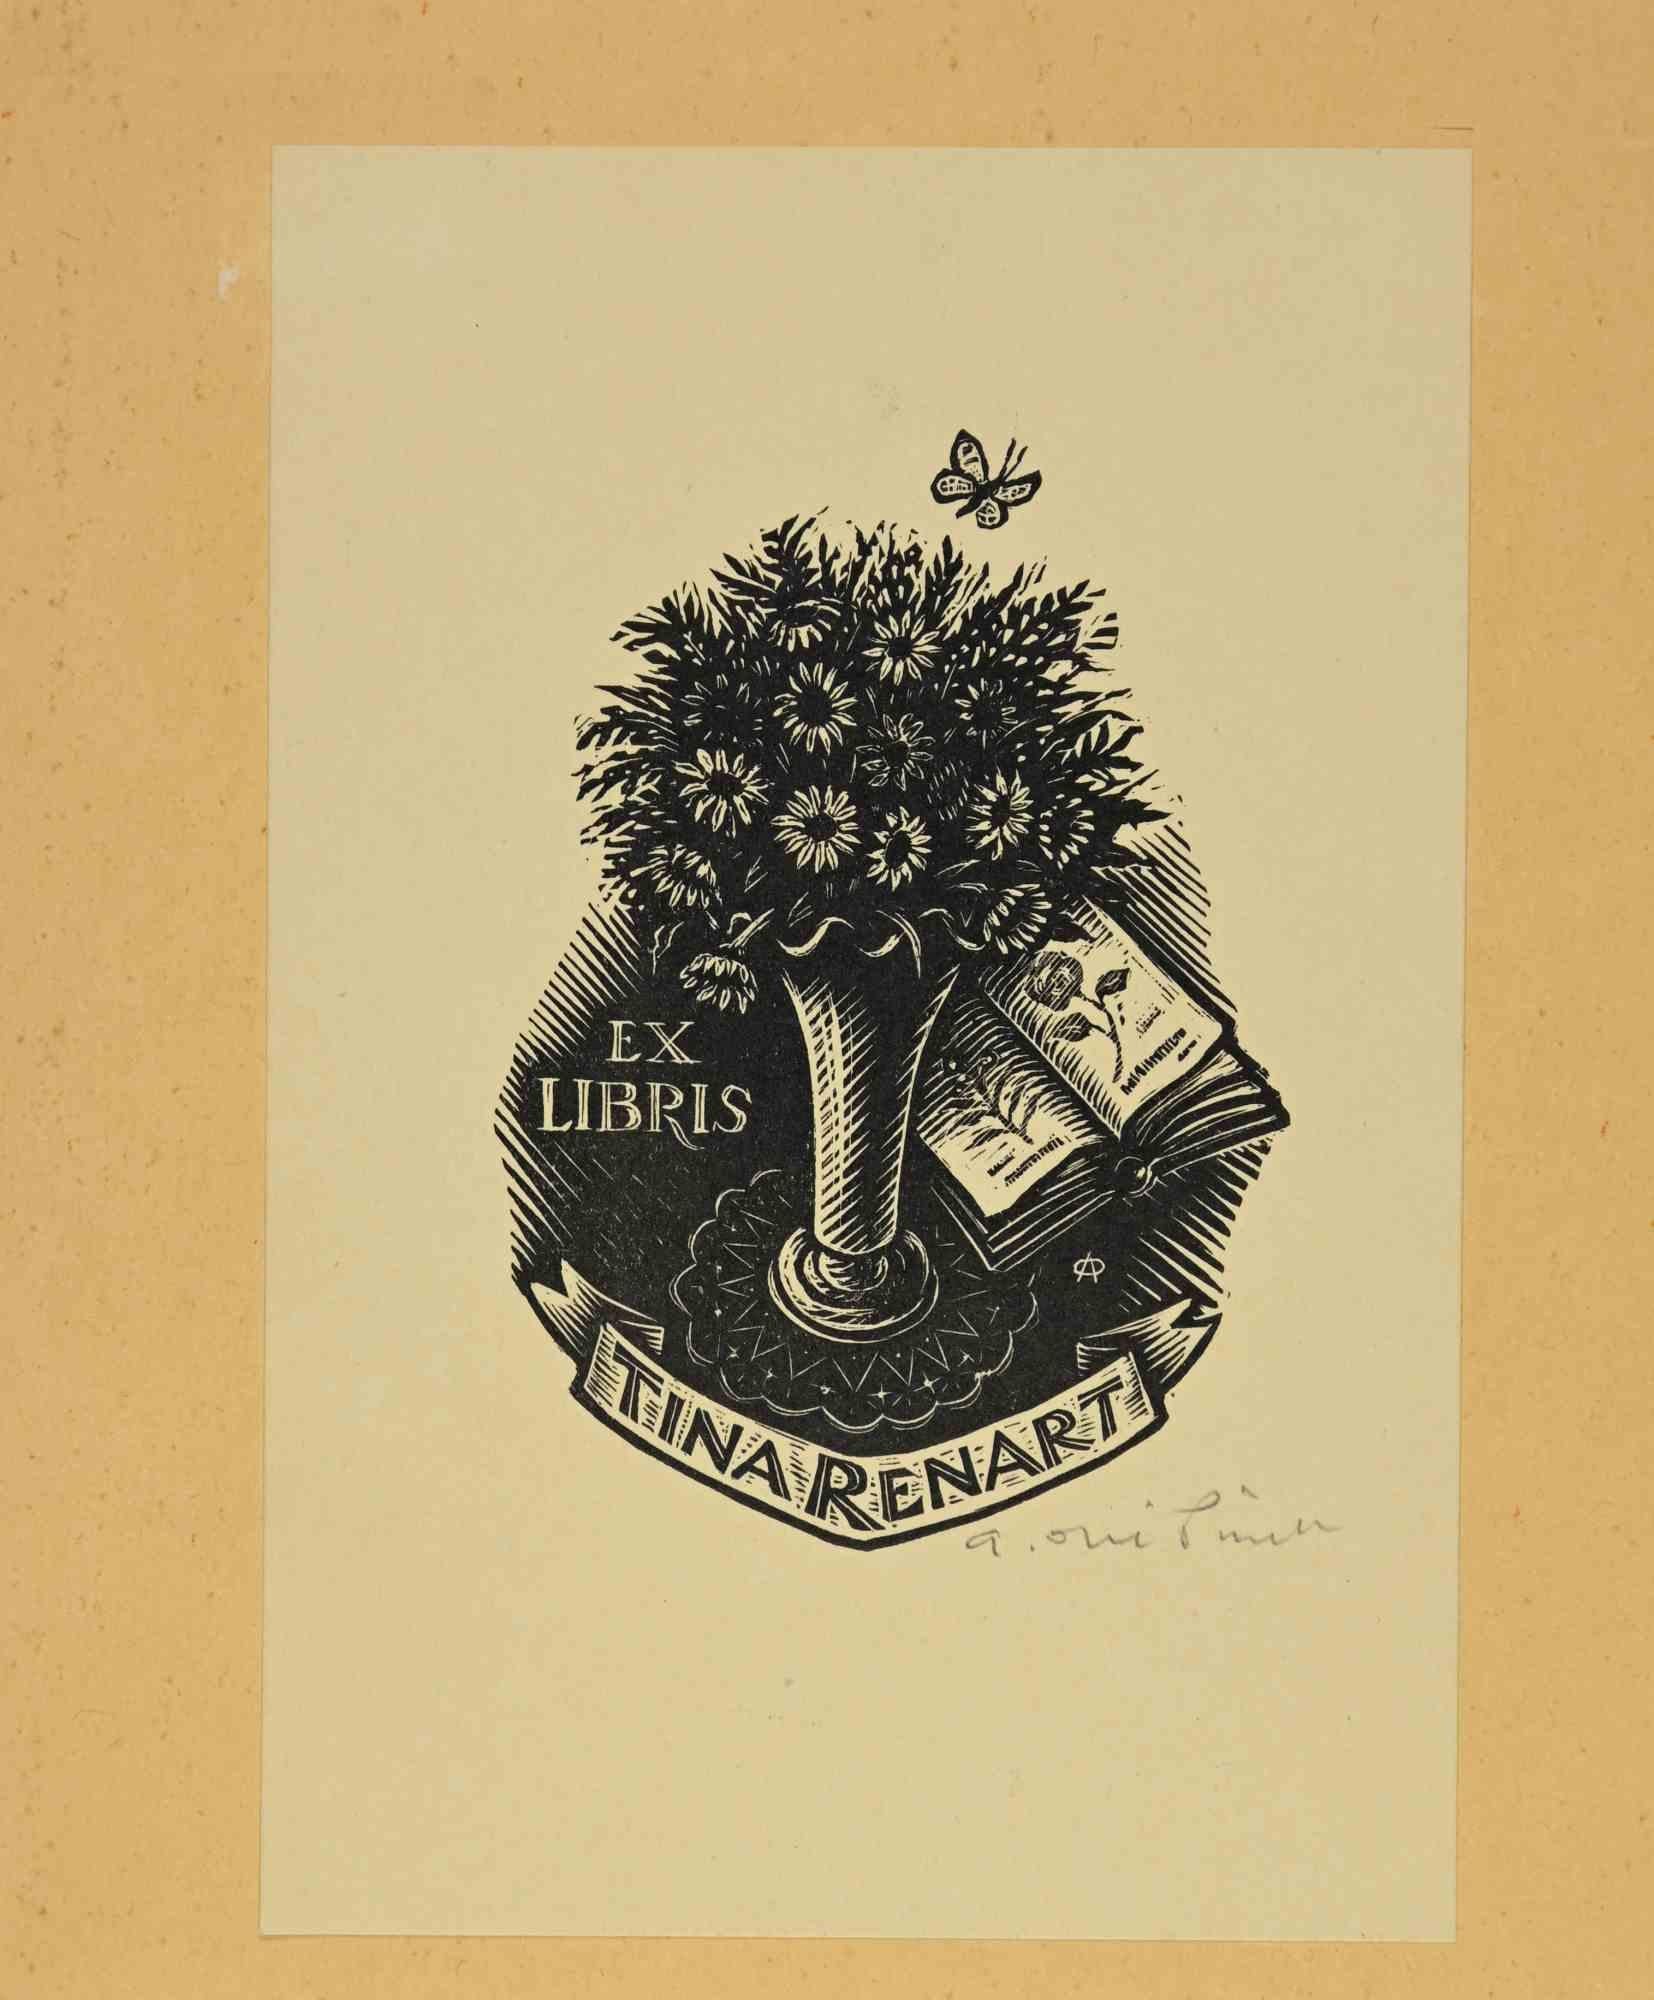 Unknown Figurative Print - Ex Libris - Tina Renart - Woodcut - Mid 20th Century